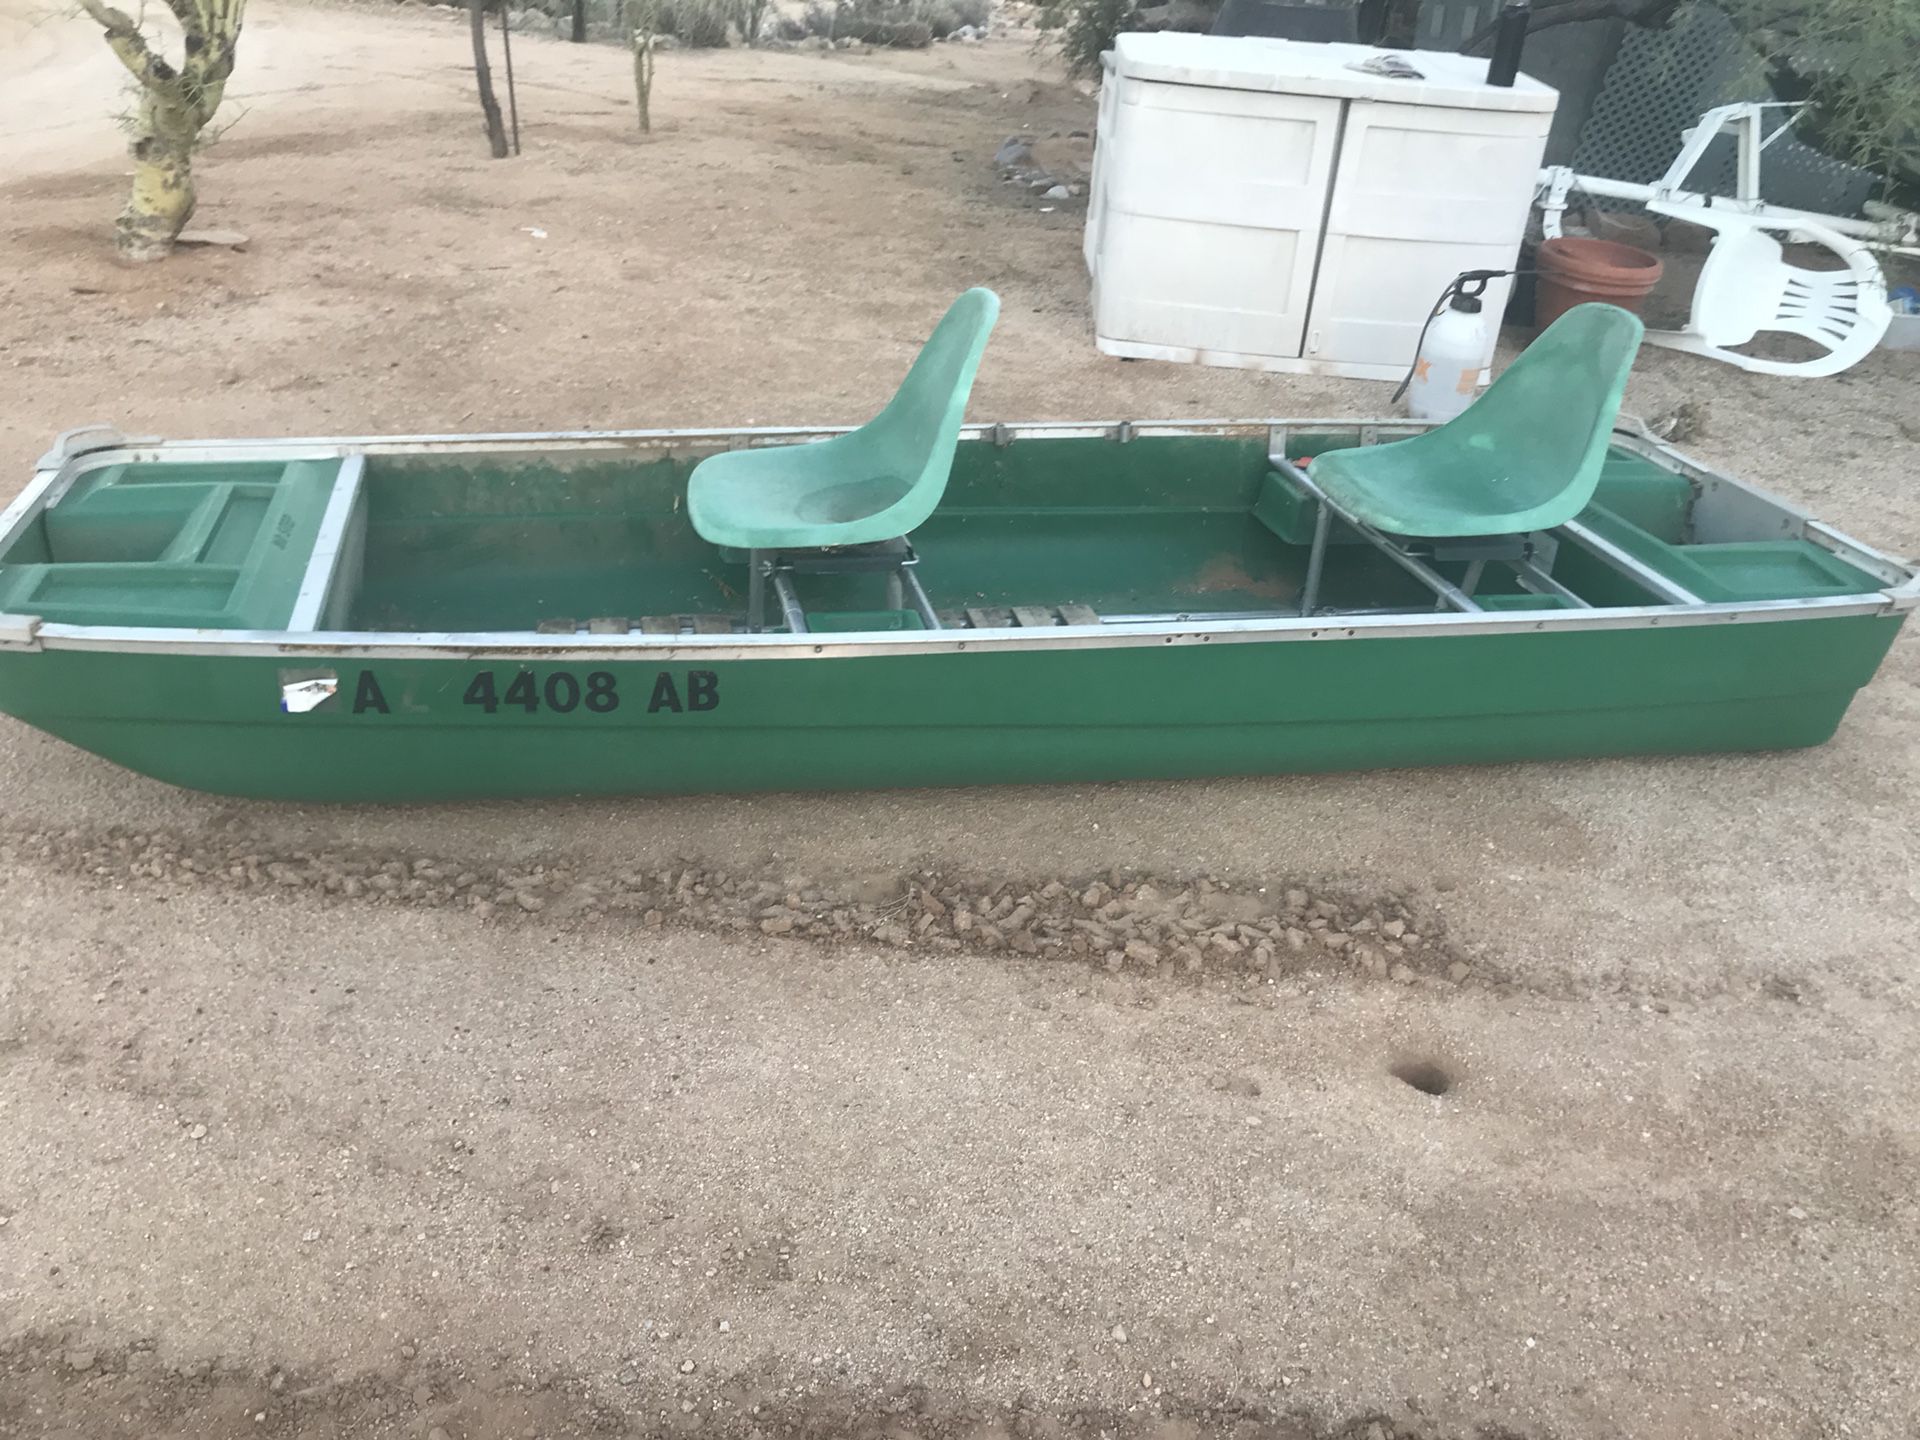 Colman Plastic John Boat for Sale in Tucson, AZ - OfferUp